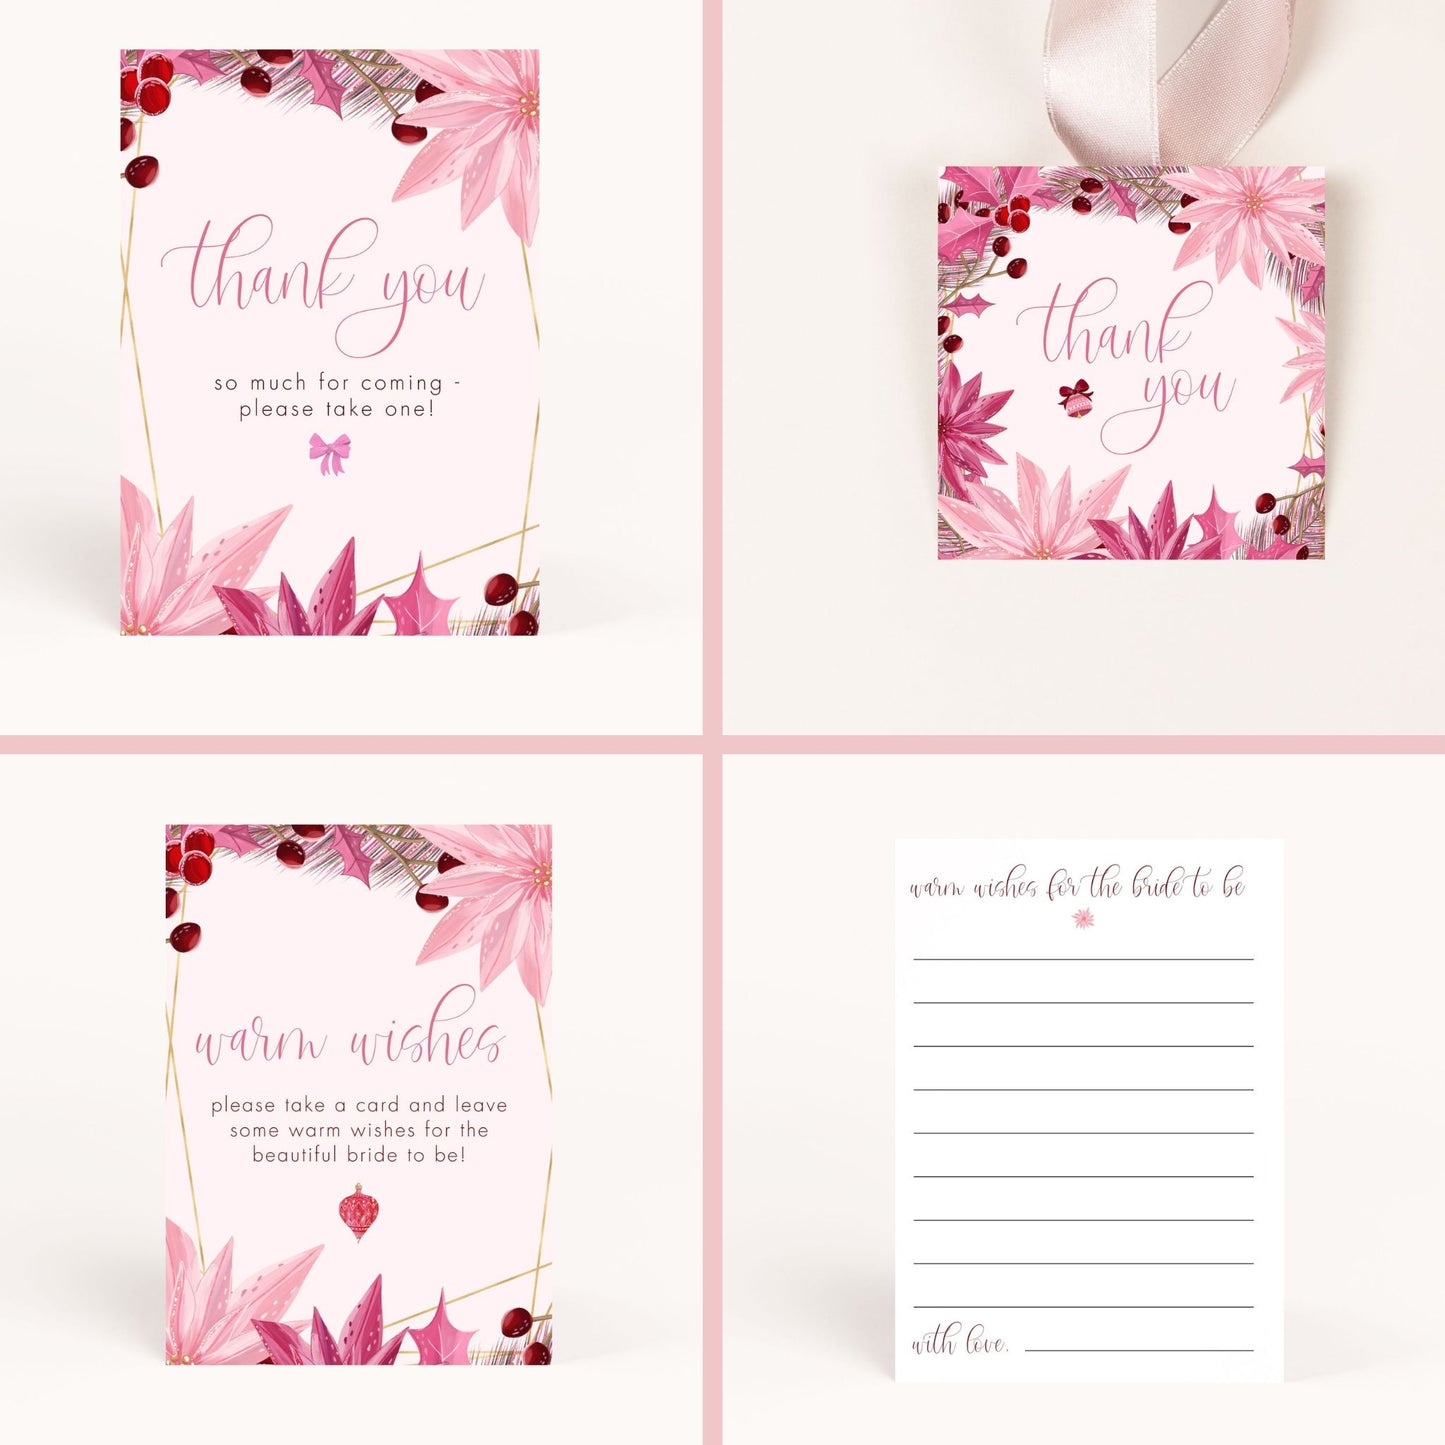 Pink Christmas Bridal Shower Printable Package